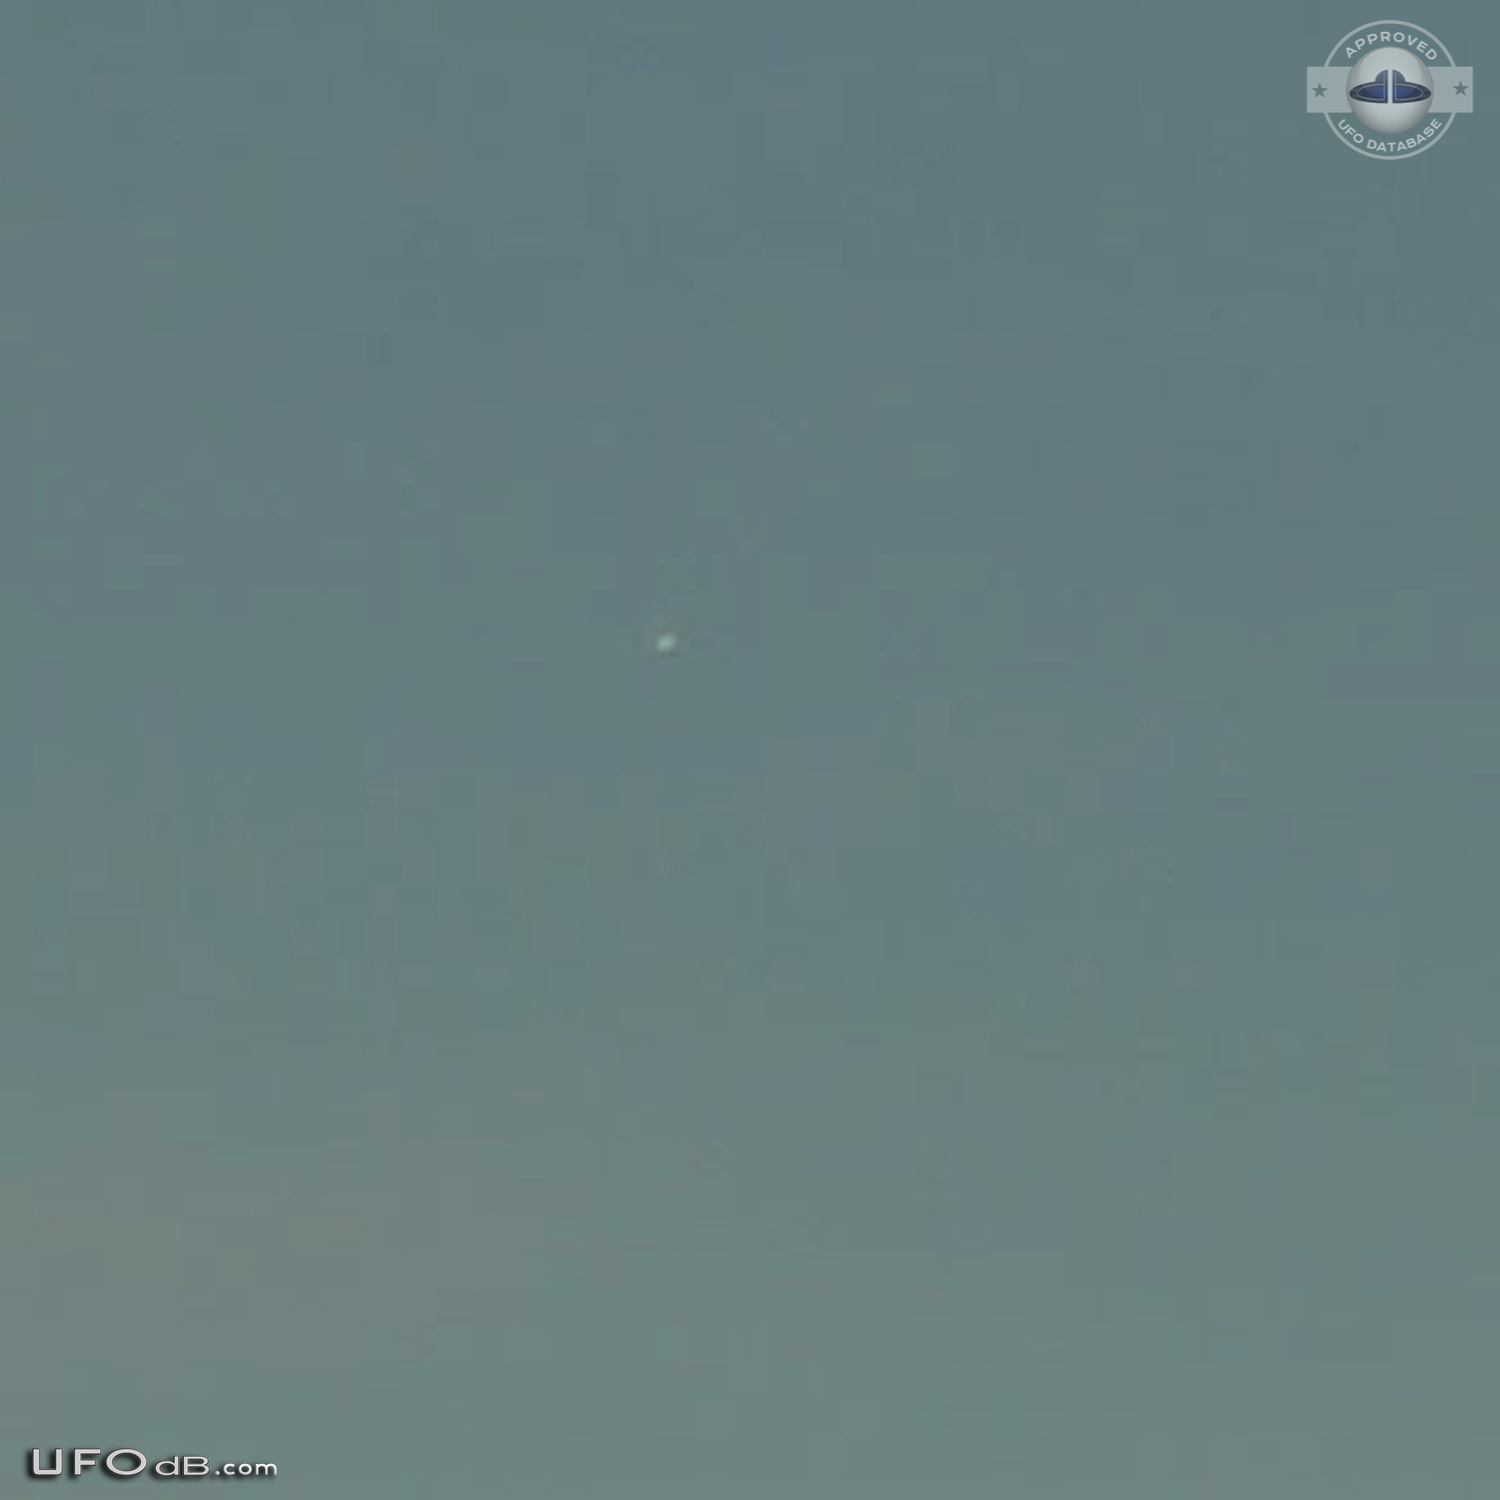 Sea picture capture UFO far away near Riau Islands Indonesia 2014 UFO Picture #636-4